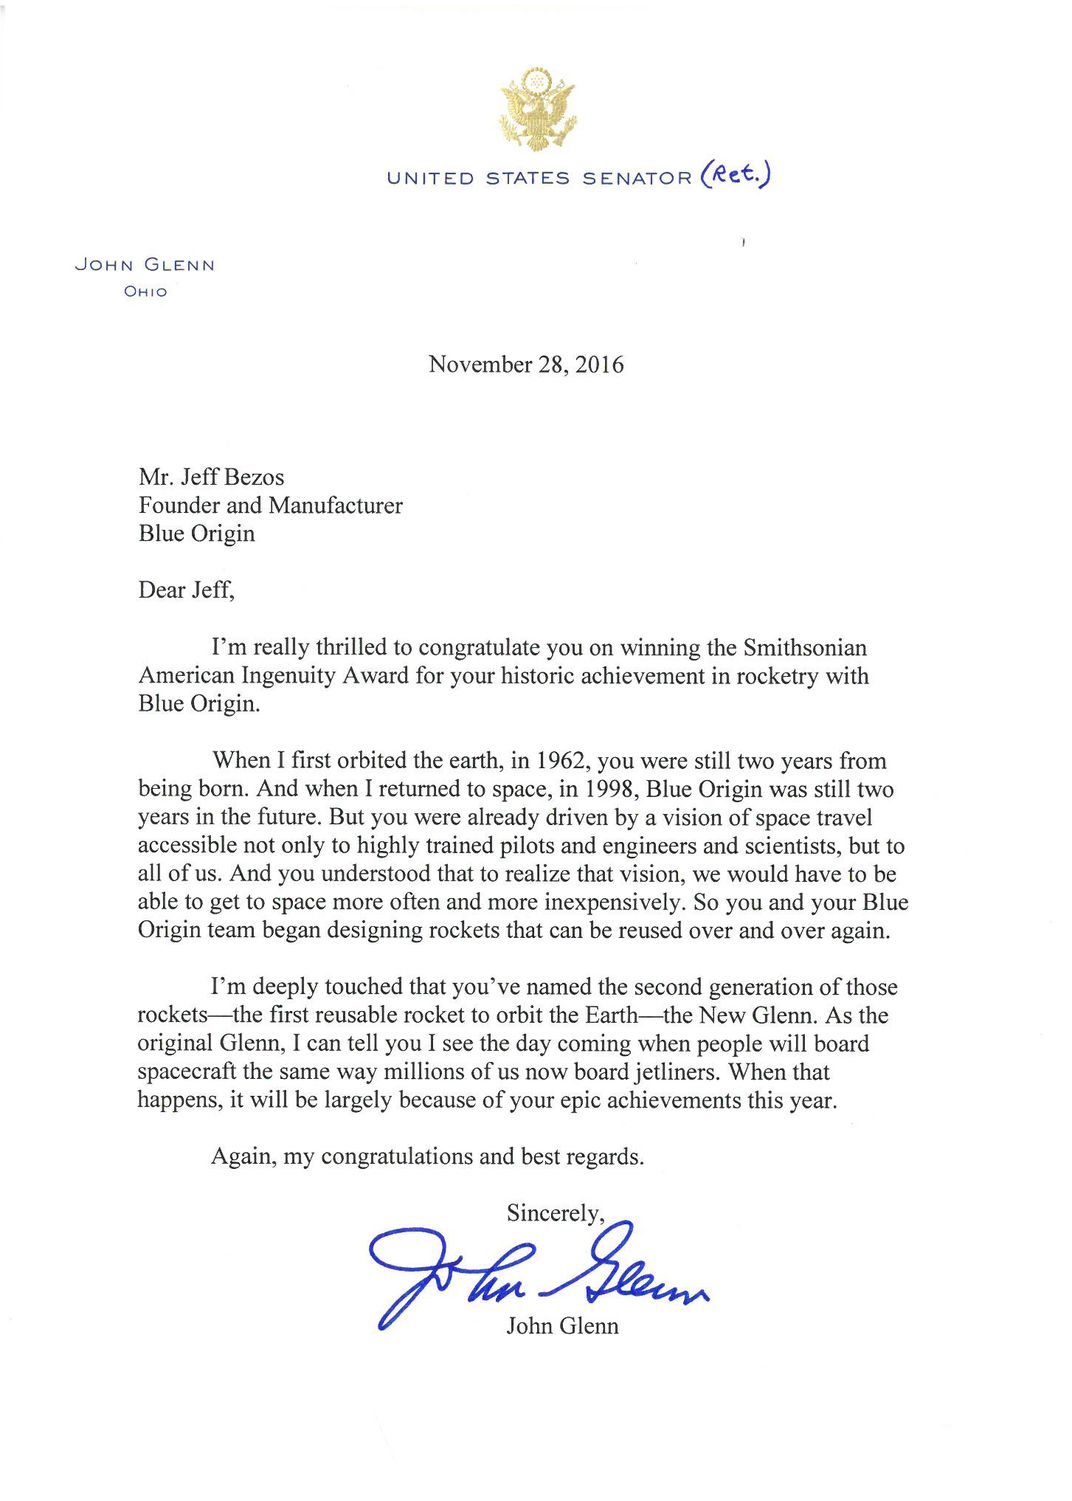 Read the Letter Written by John Glenn to Honor Jeff Bezos for Blue Origin